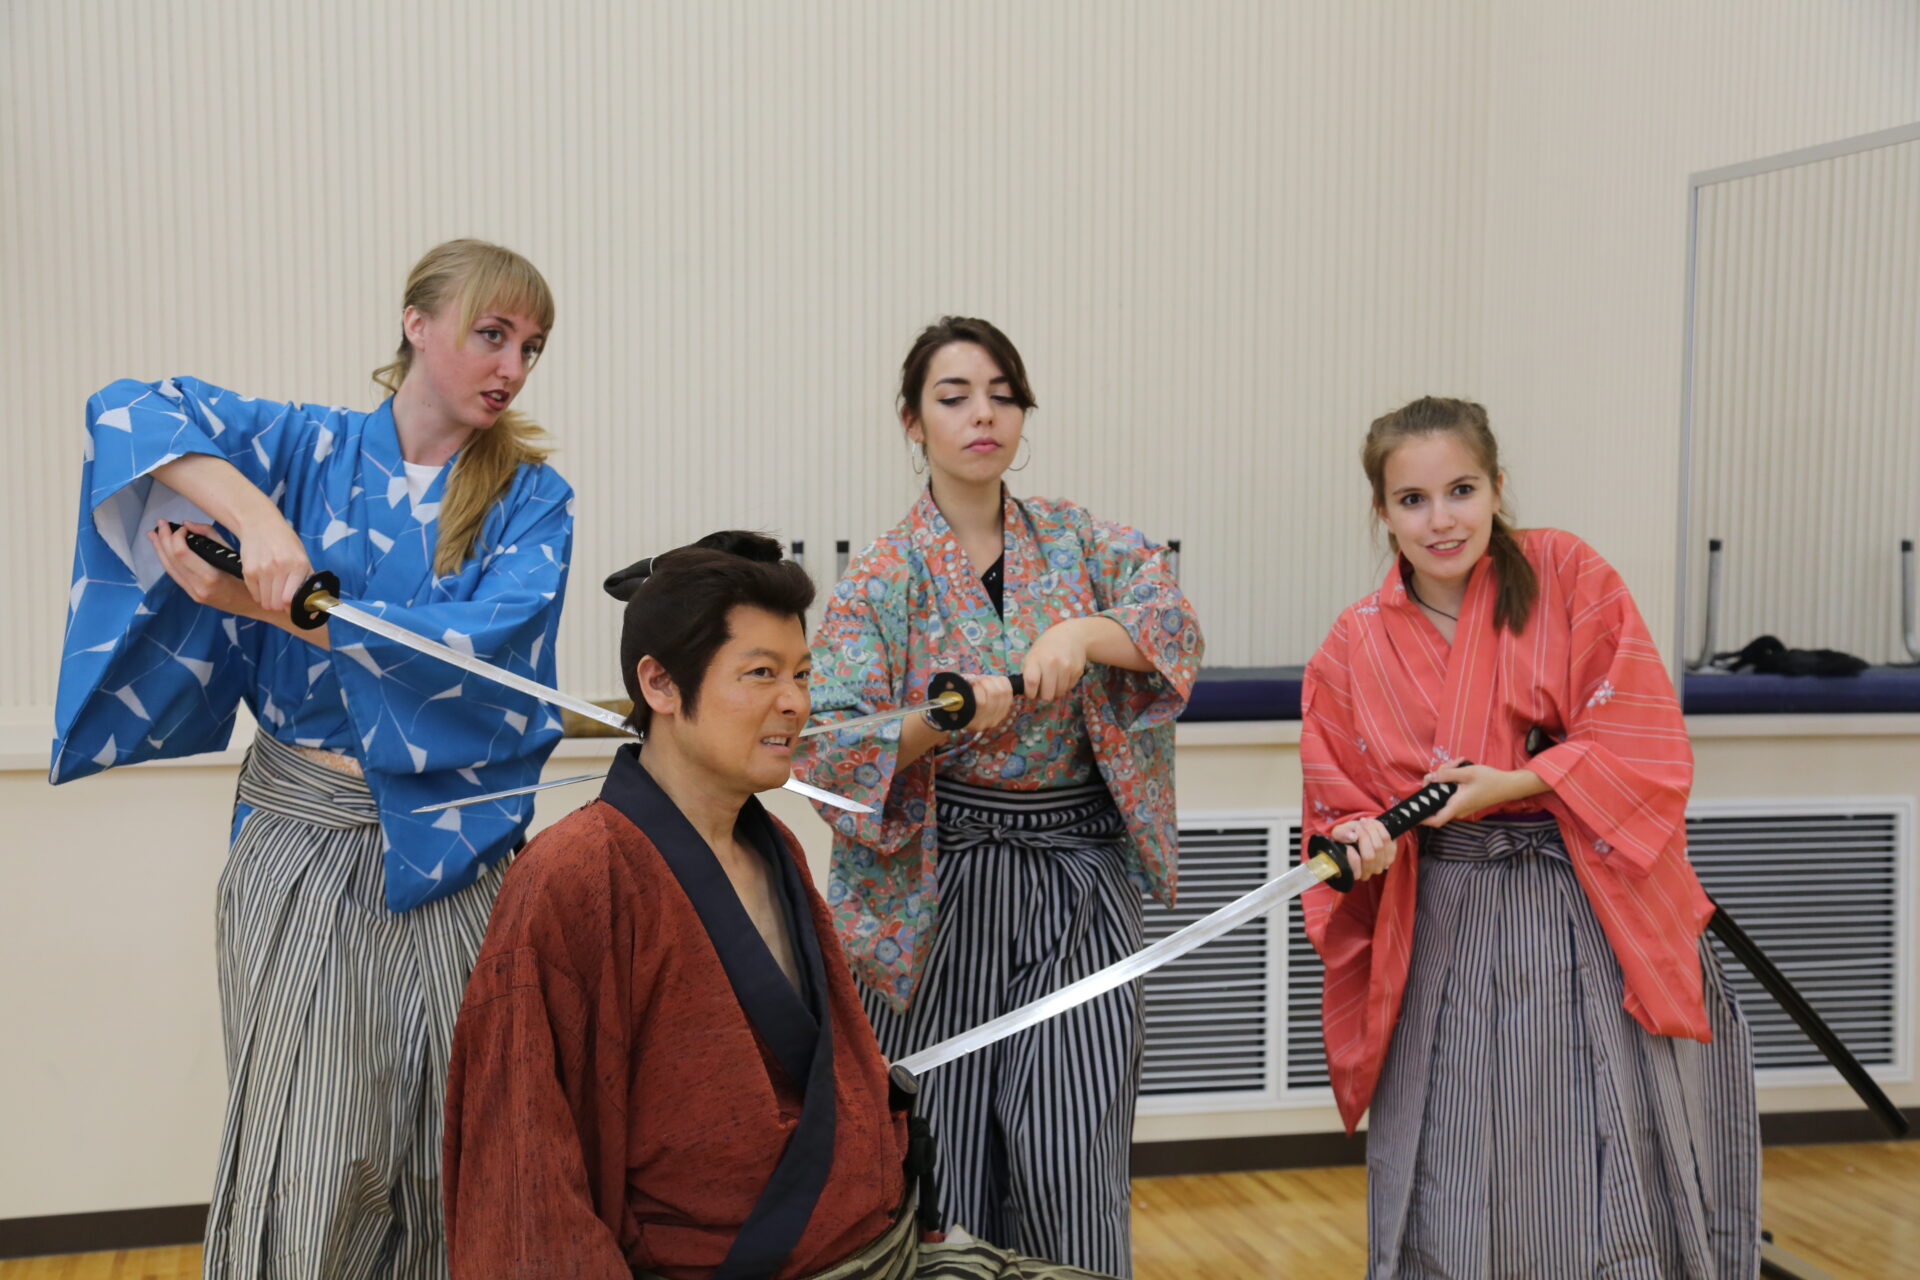 Toei Studios KyotoPremium Samurai/Ninja Costume and Fitting Tour